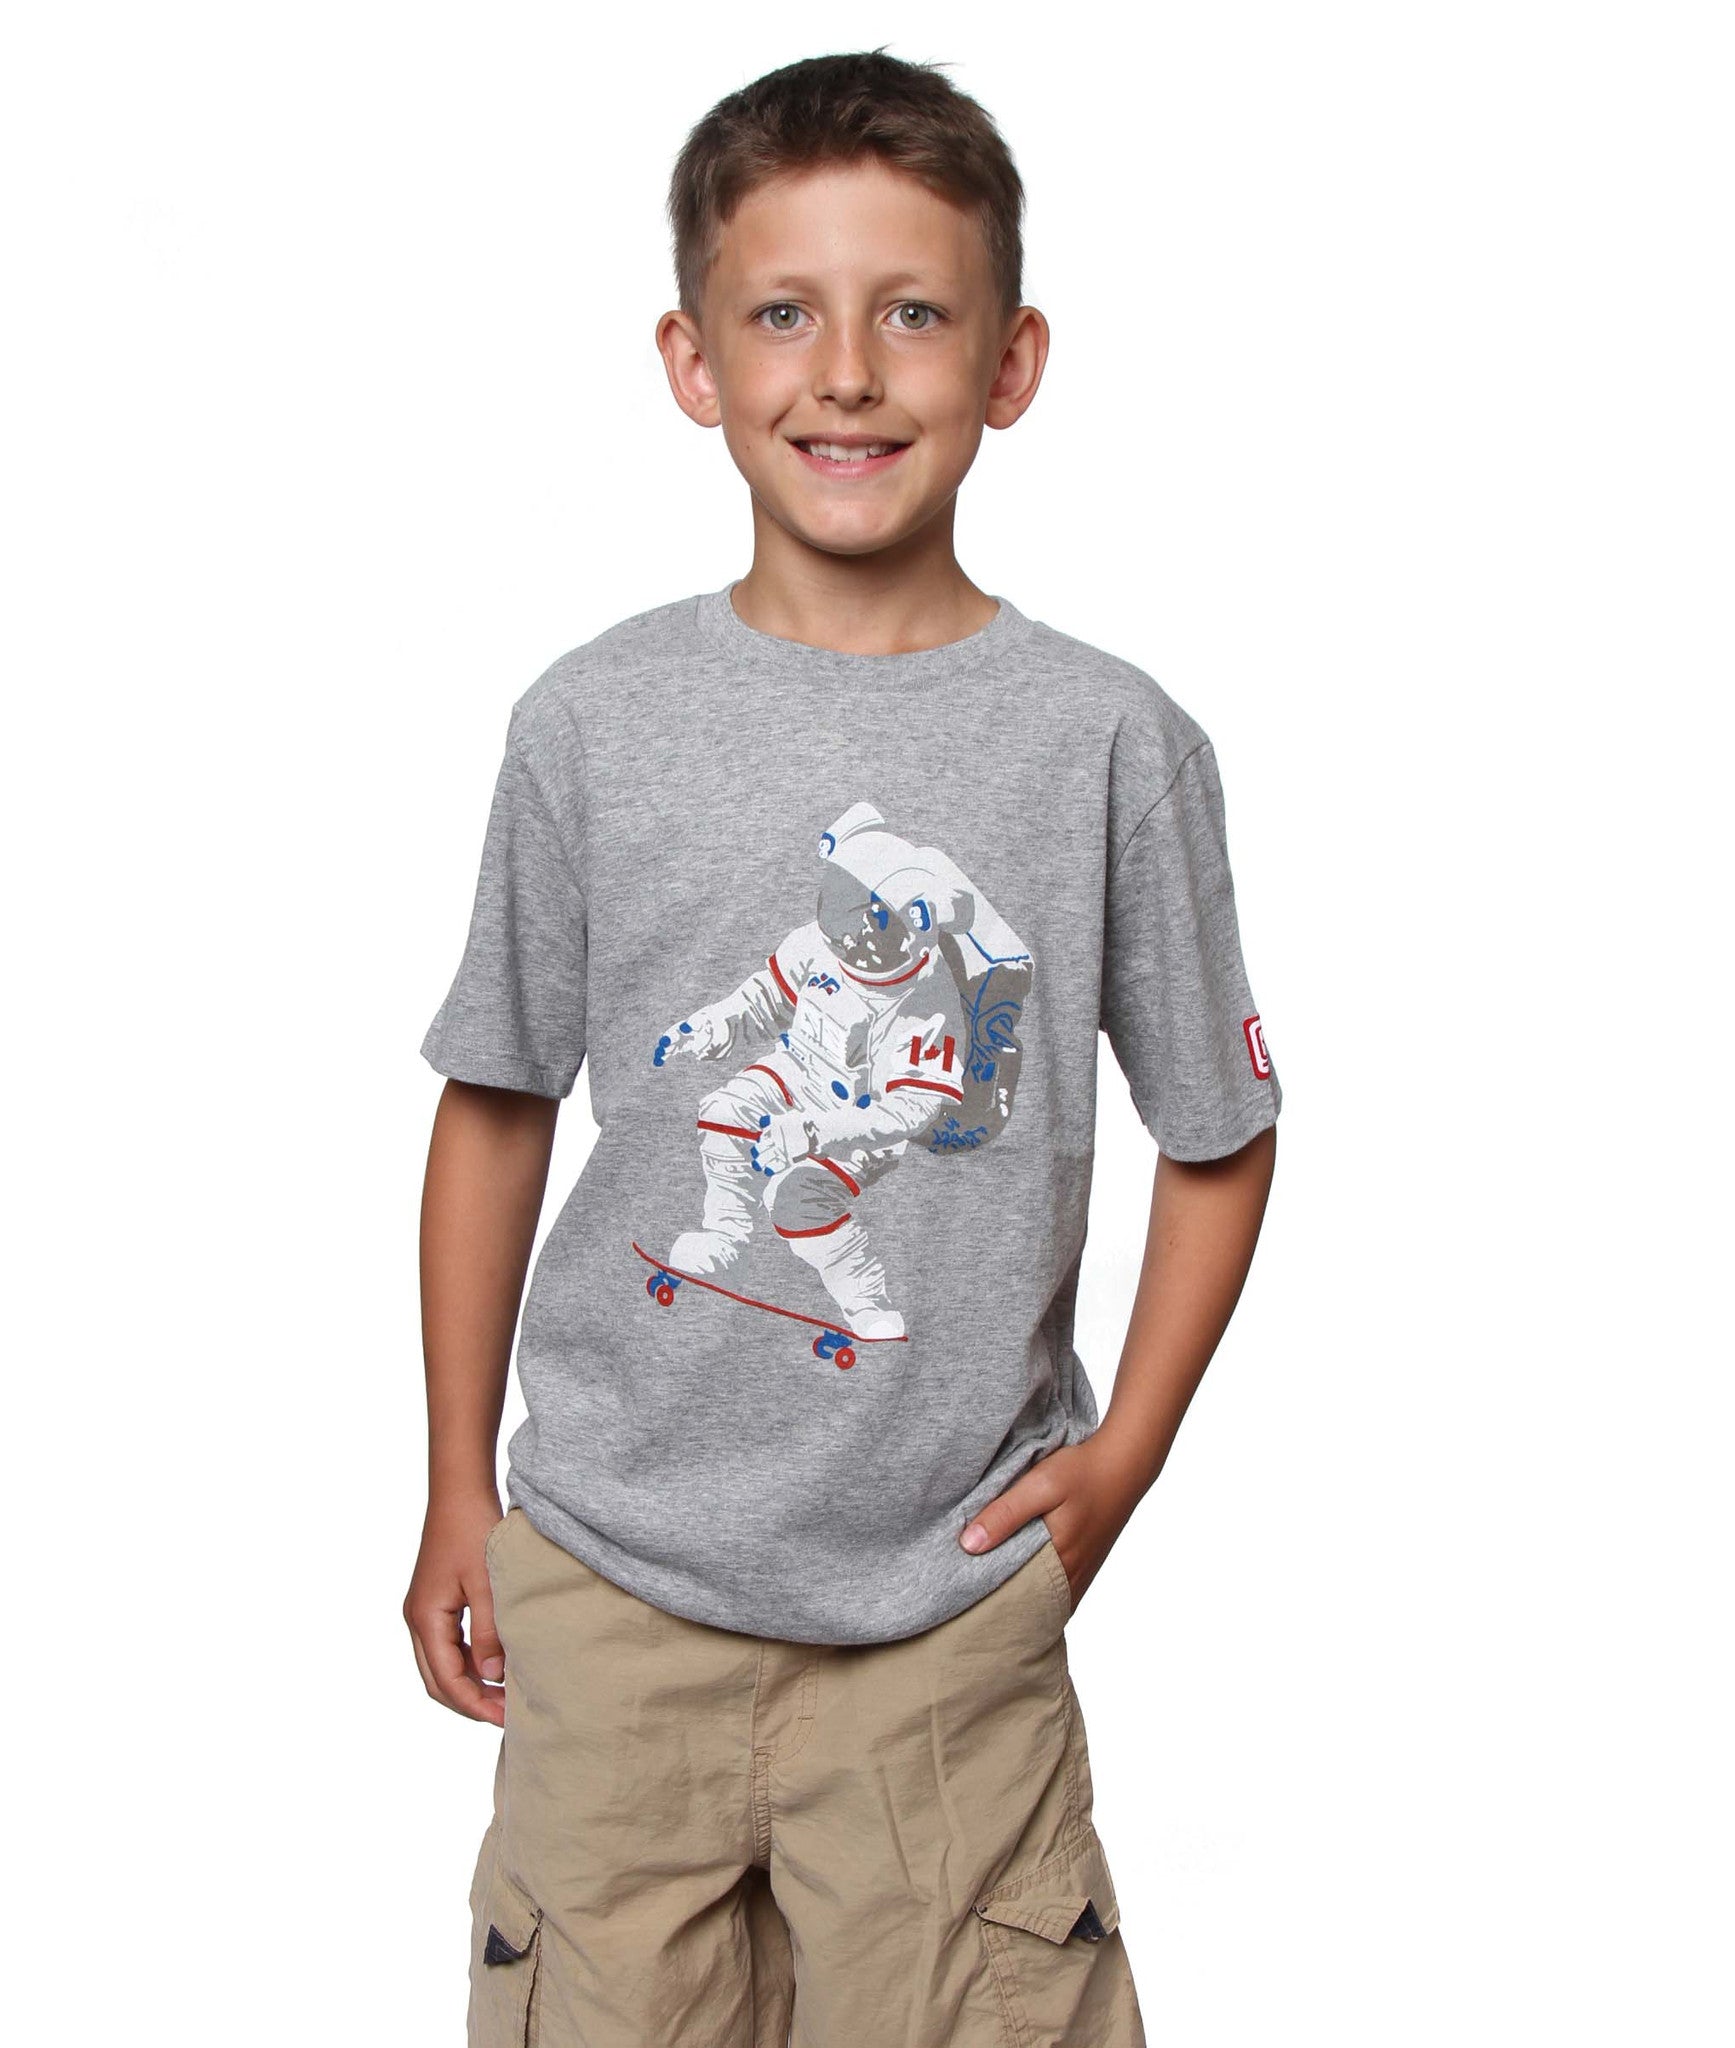 Chris Hadfield Skateboarding Astronaut Boy's T-Shirt | 60°N 95°W Brand ...